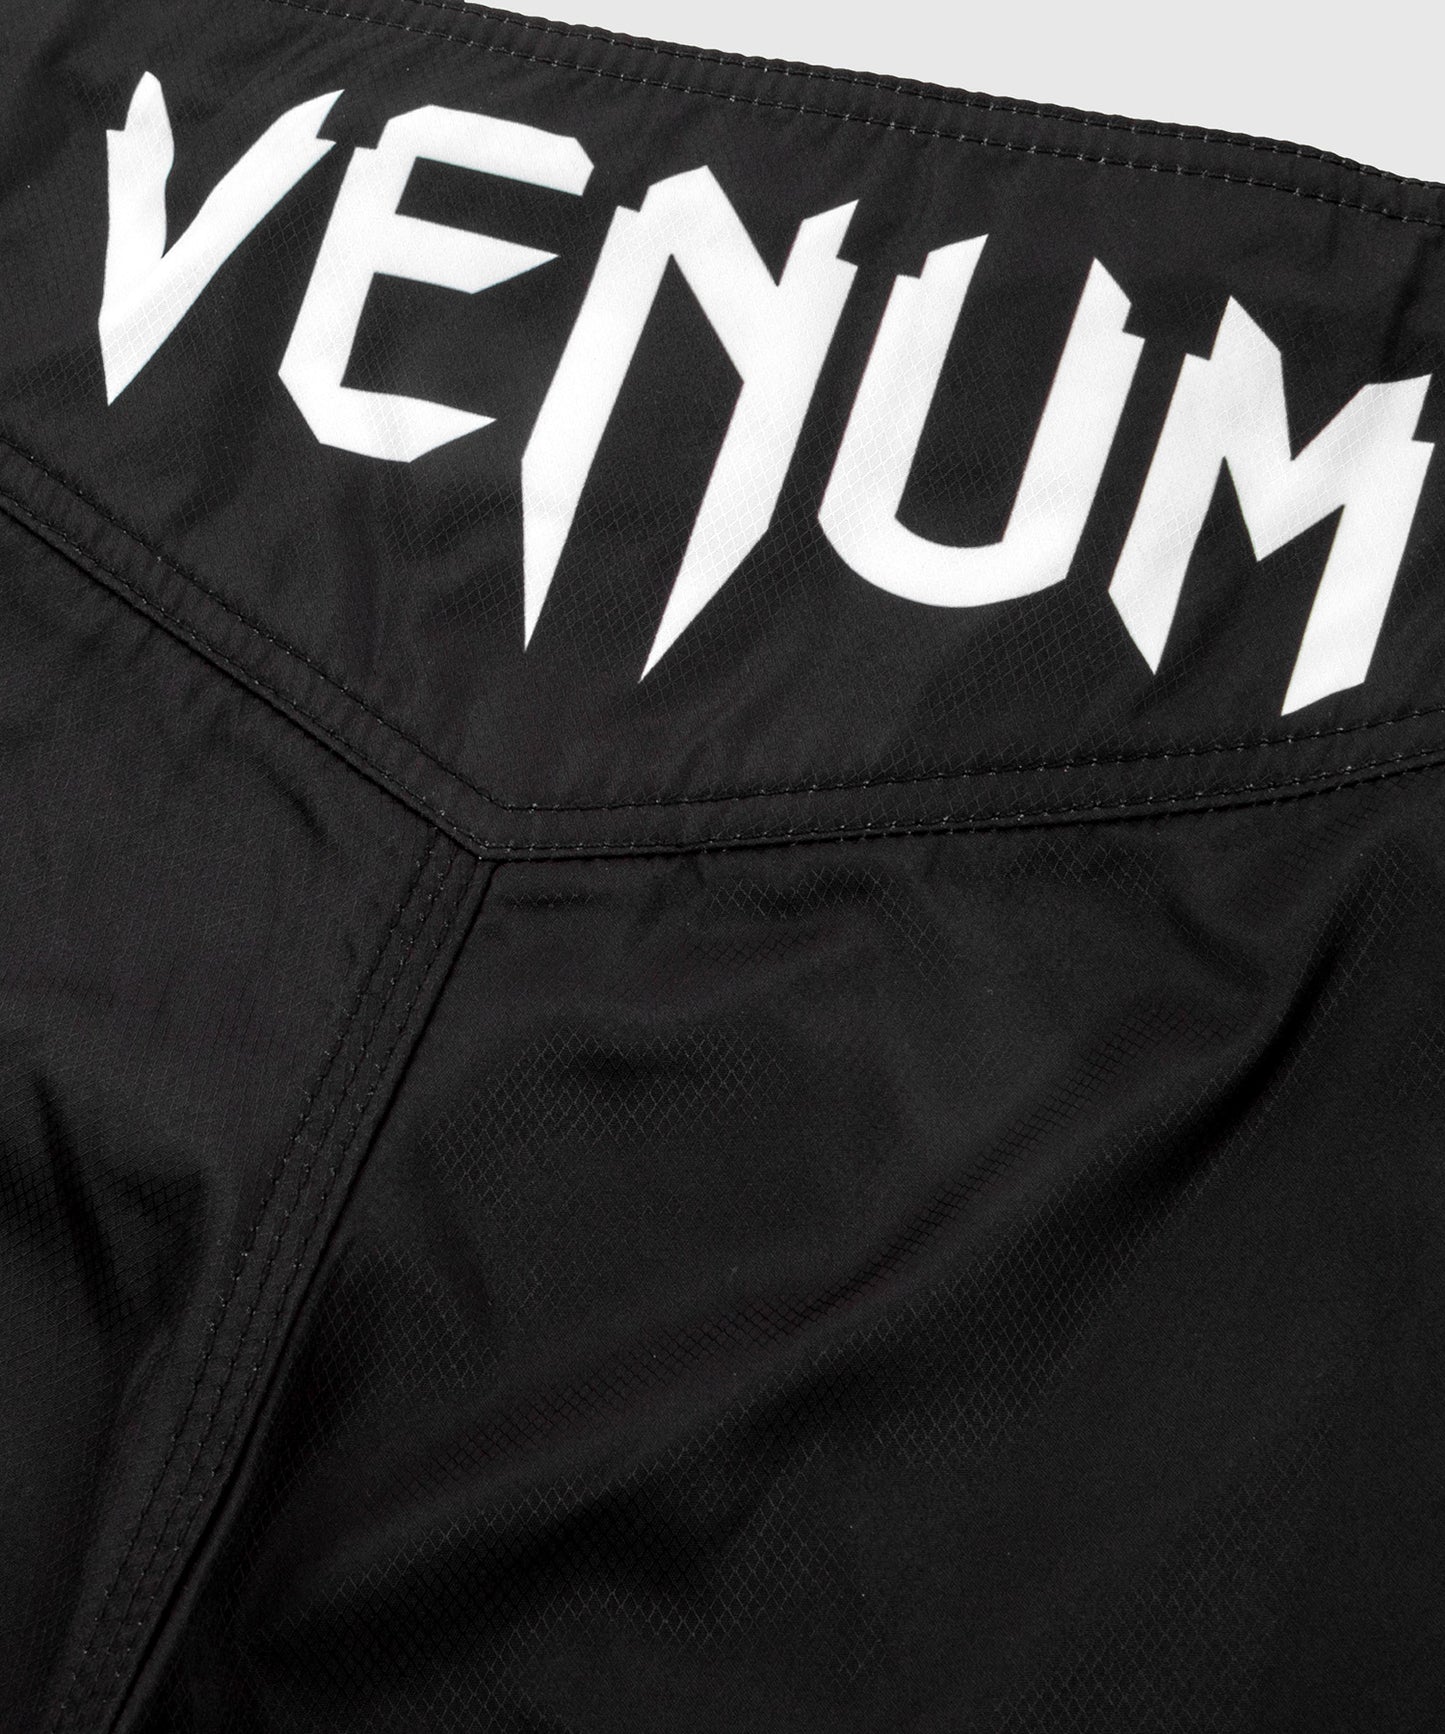 Venum Light 3.0 Fightshorts - Black/White